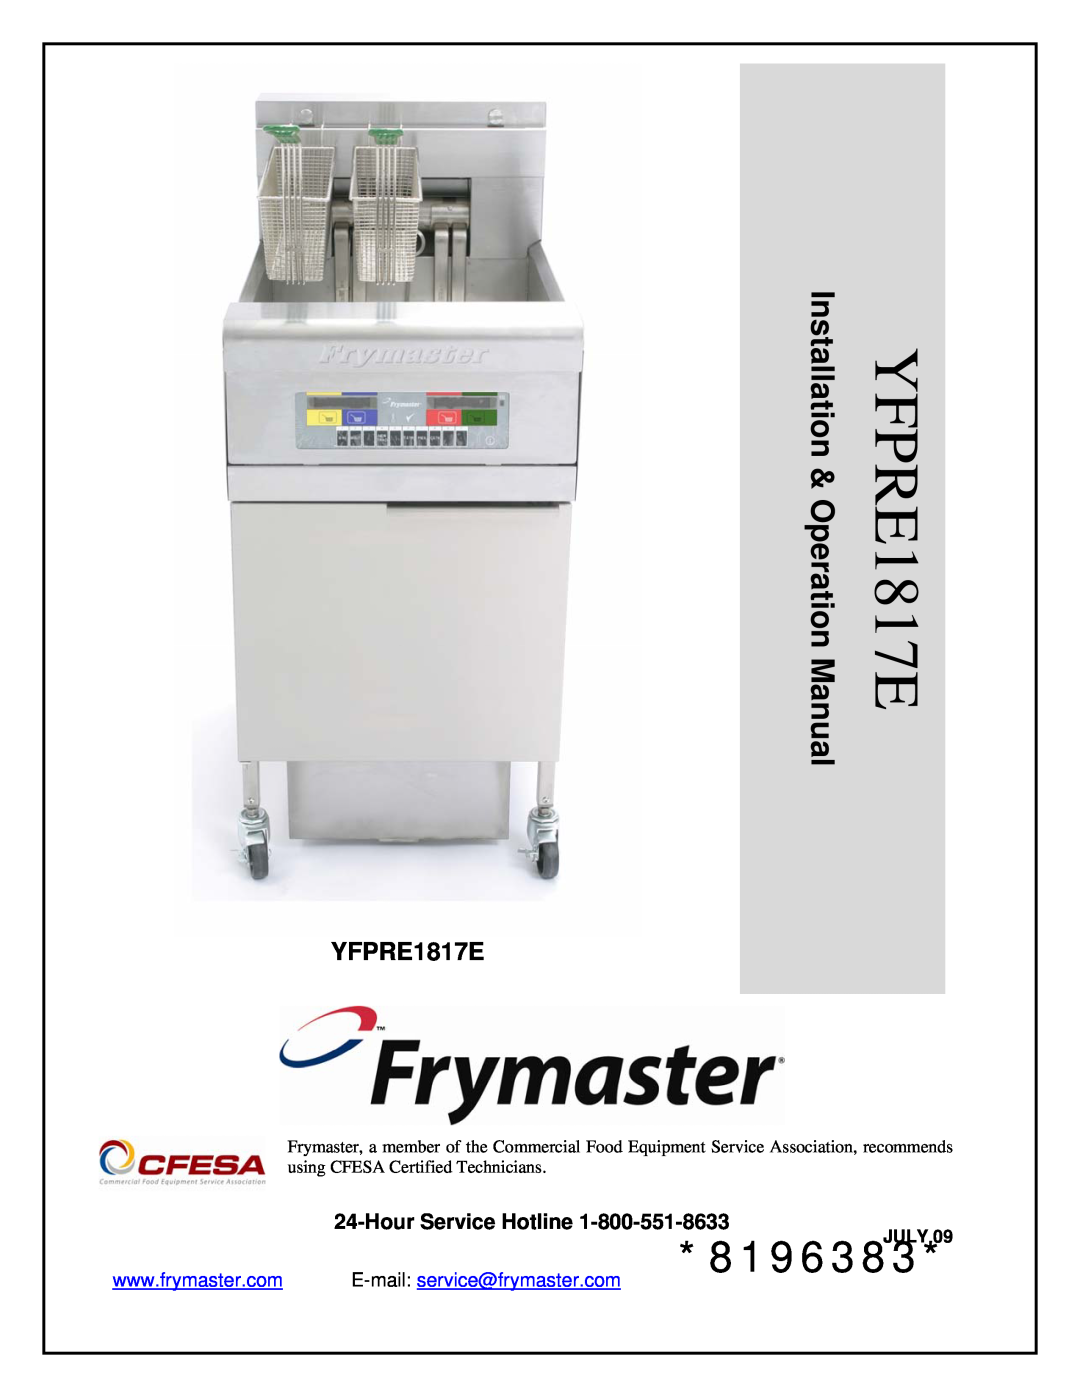 Frymaster YFPRE1817E operation manual 8196383, Installation & Operation Manual, E-mail service@frymaster.com, July 